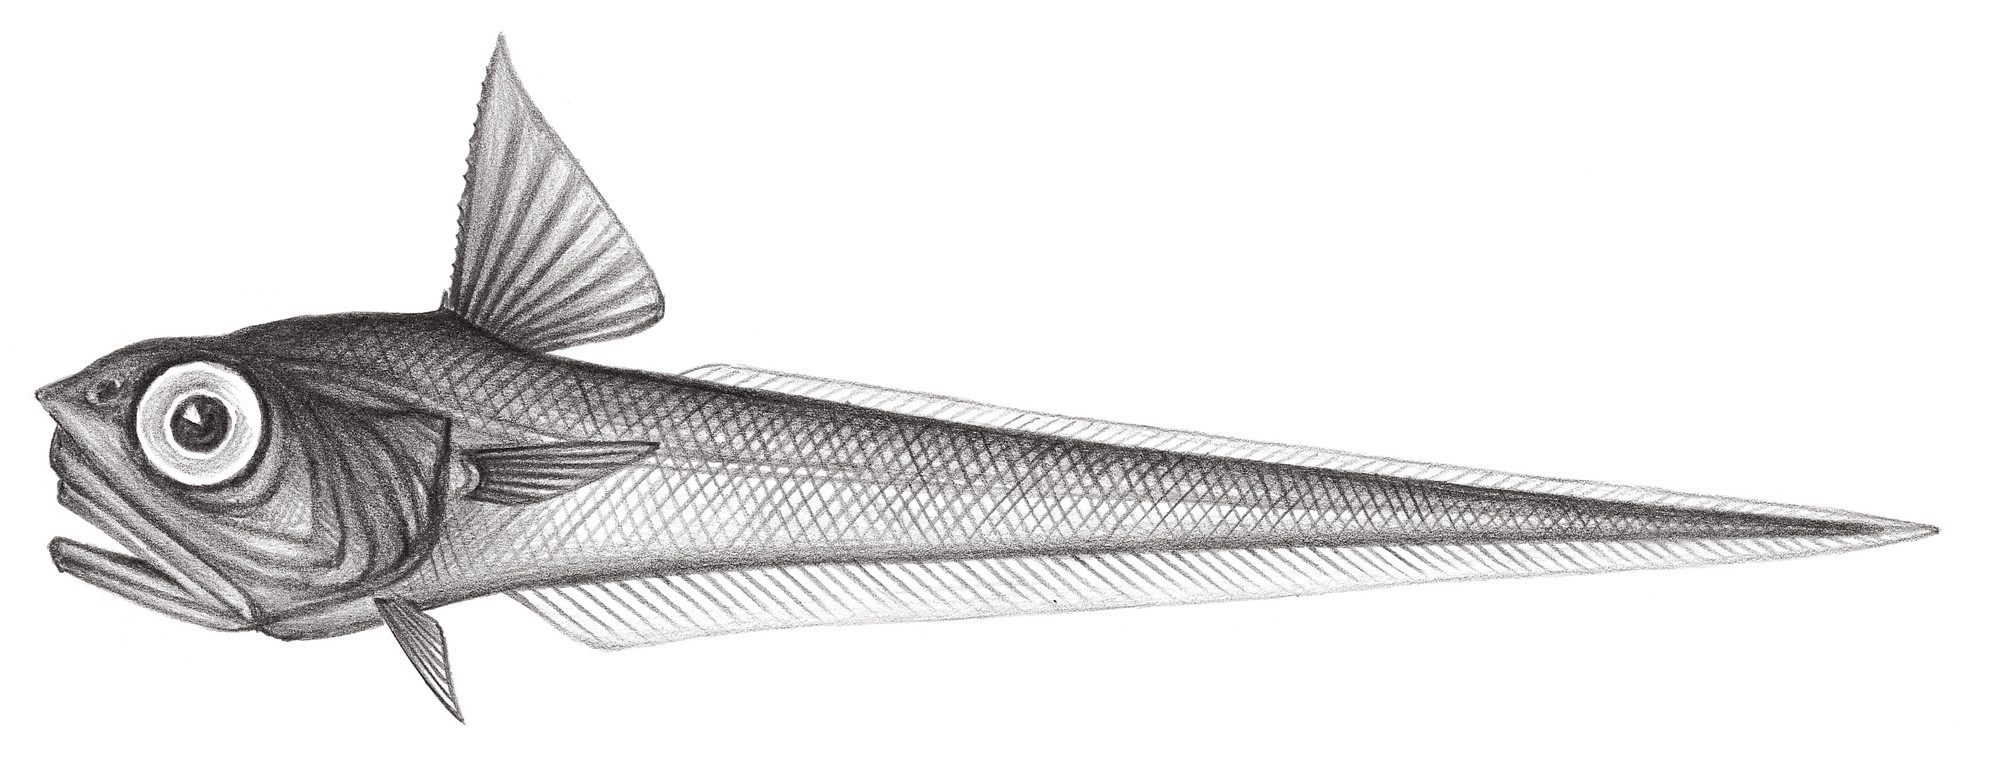 589.	擬鯨尾鱈 Pseudocetonurus setifer Sazonov & Shcherbachev, 1982